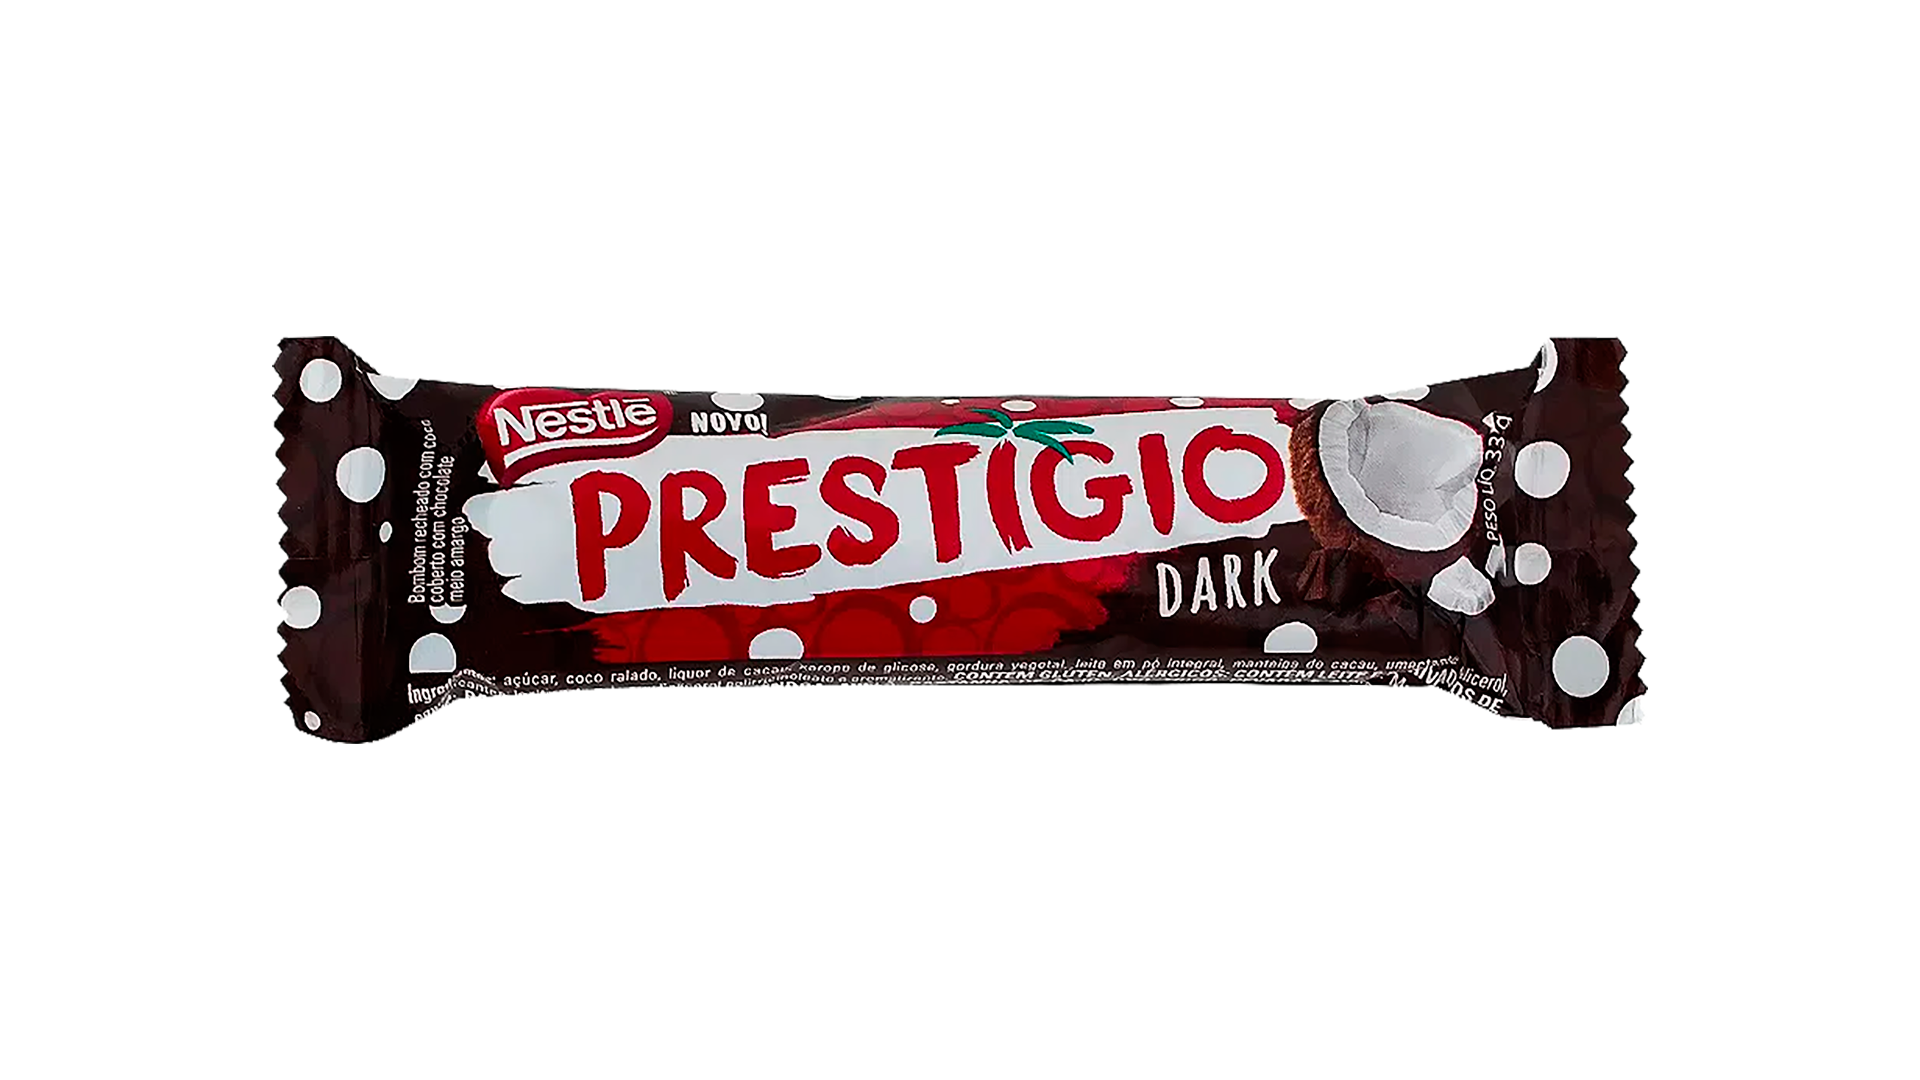 NESTLE - "Prestigio" DARK Chocolate Bar - 30g - VENDA FINAL - VENCIDO ou PRÓXIMO DO VENCIMENTO